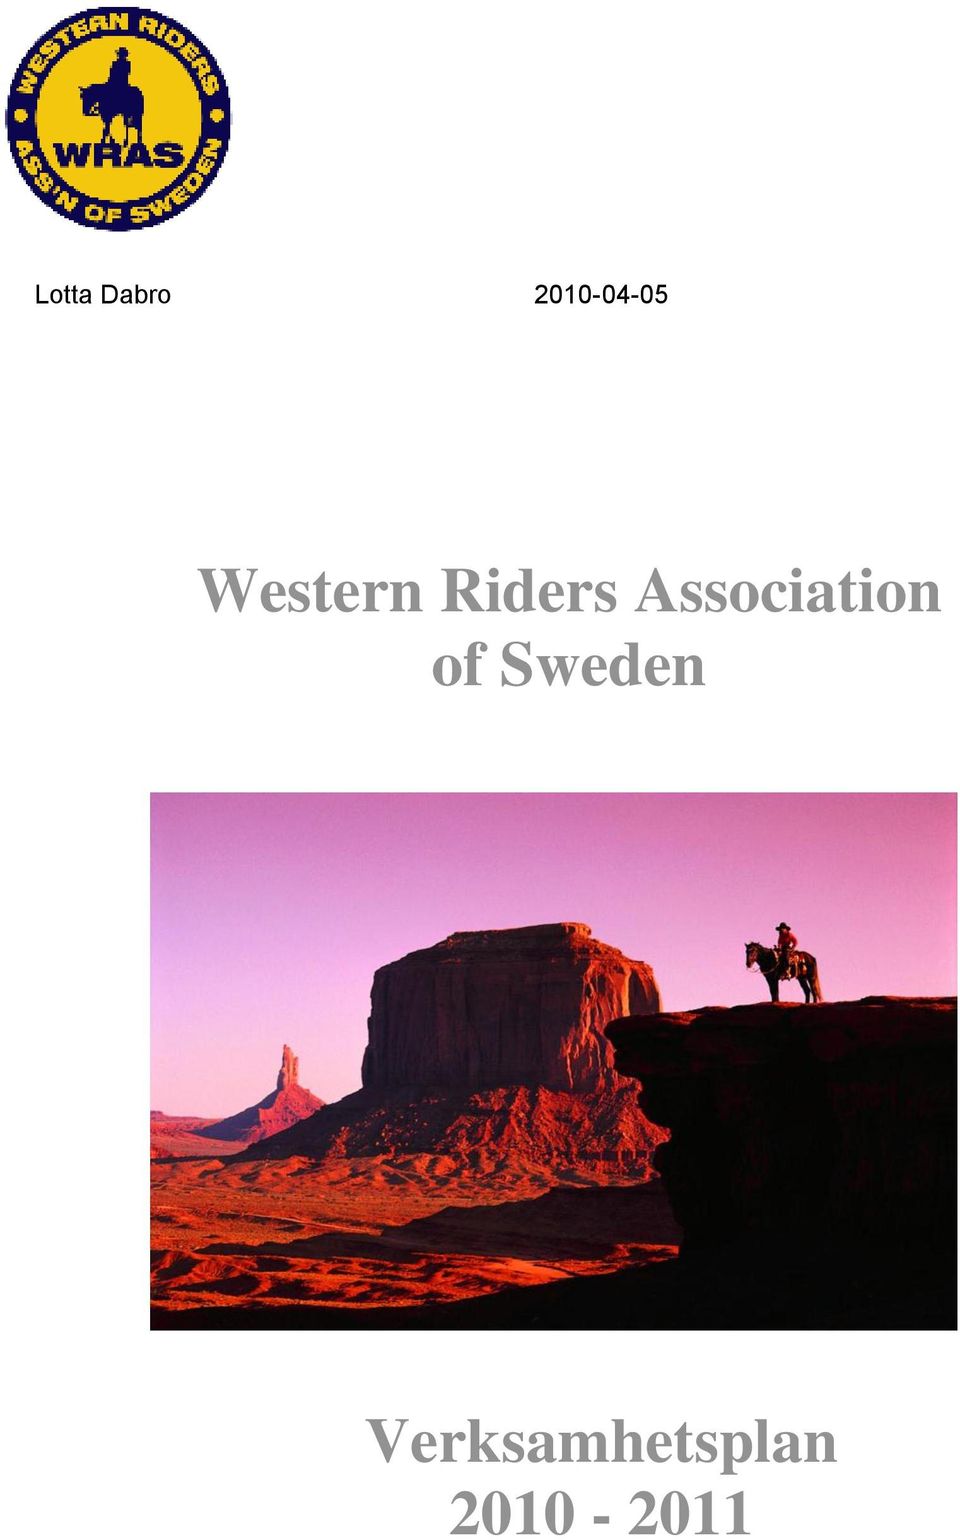 Riders Association of